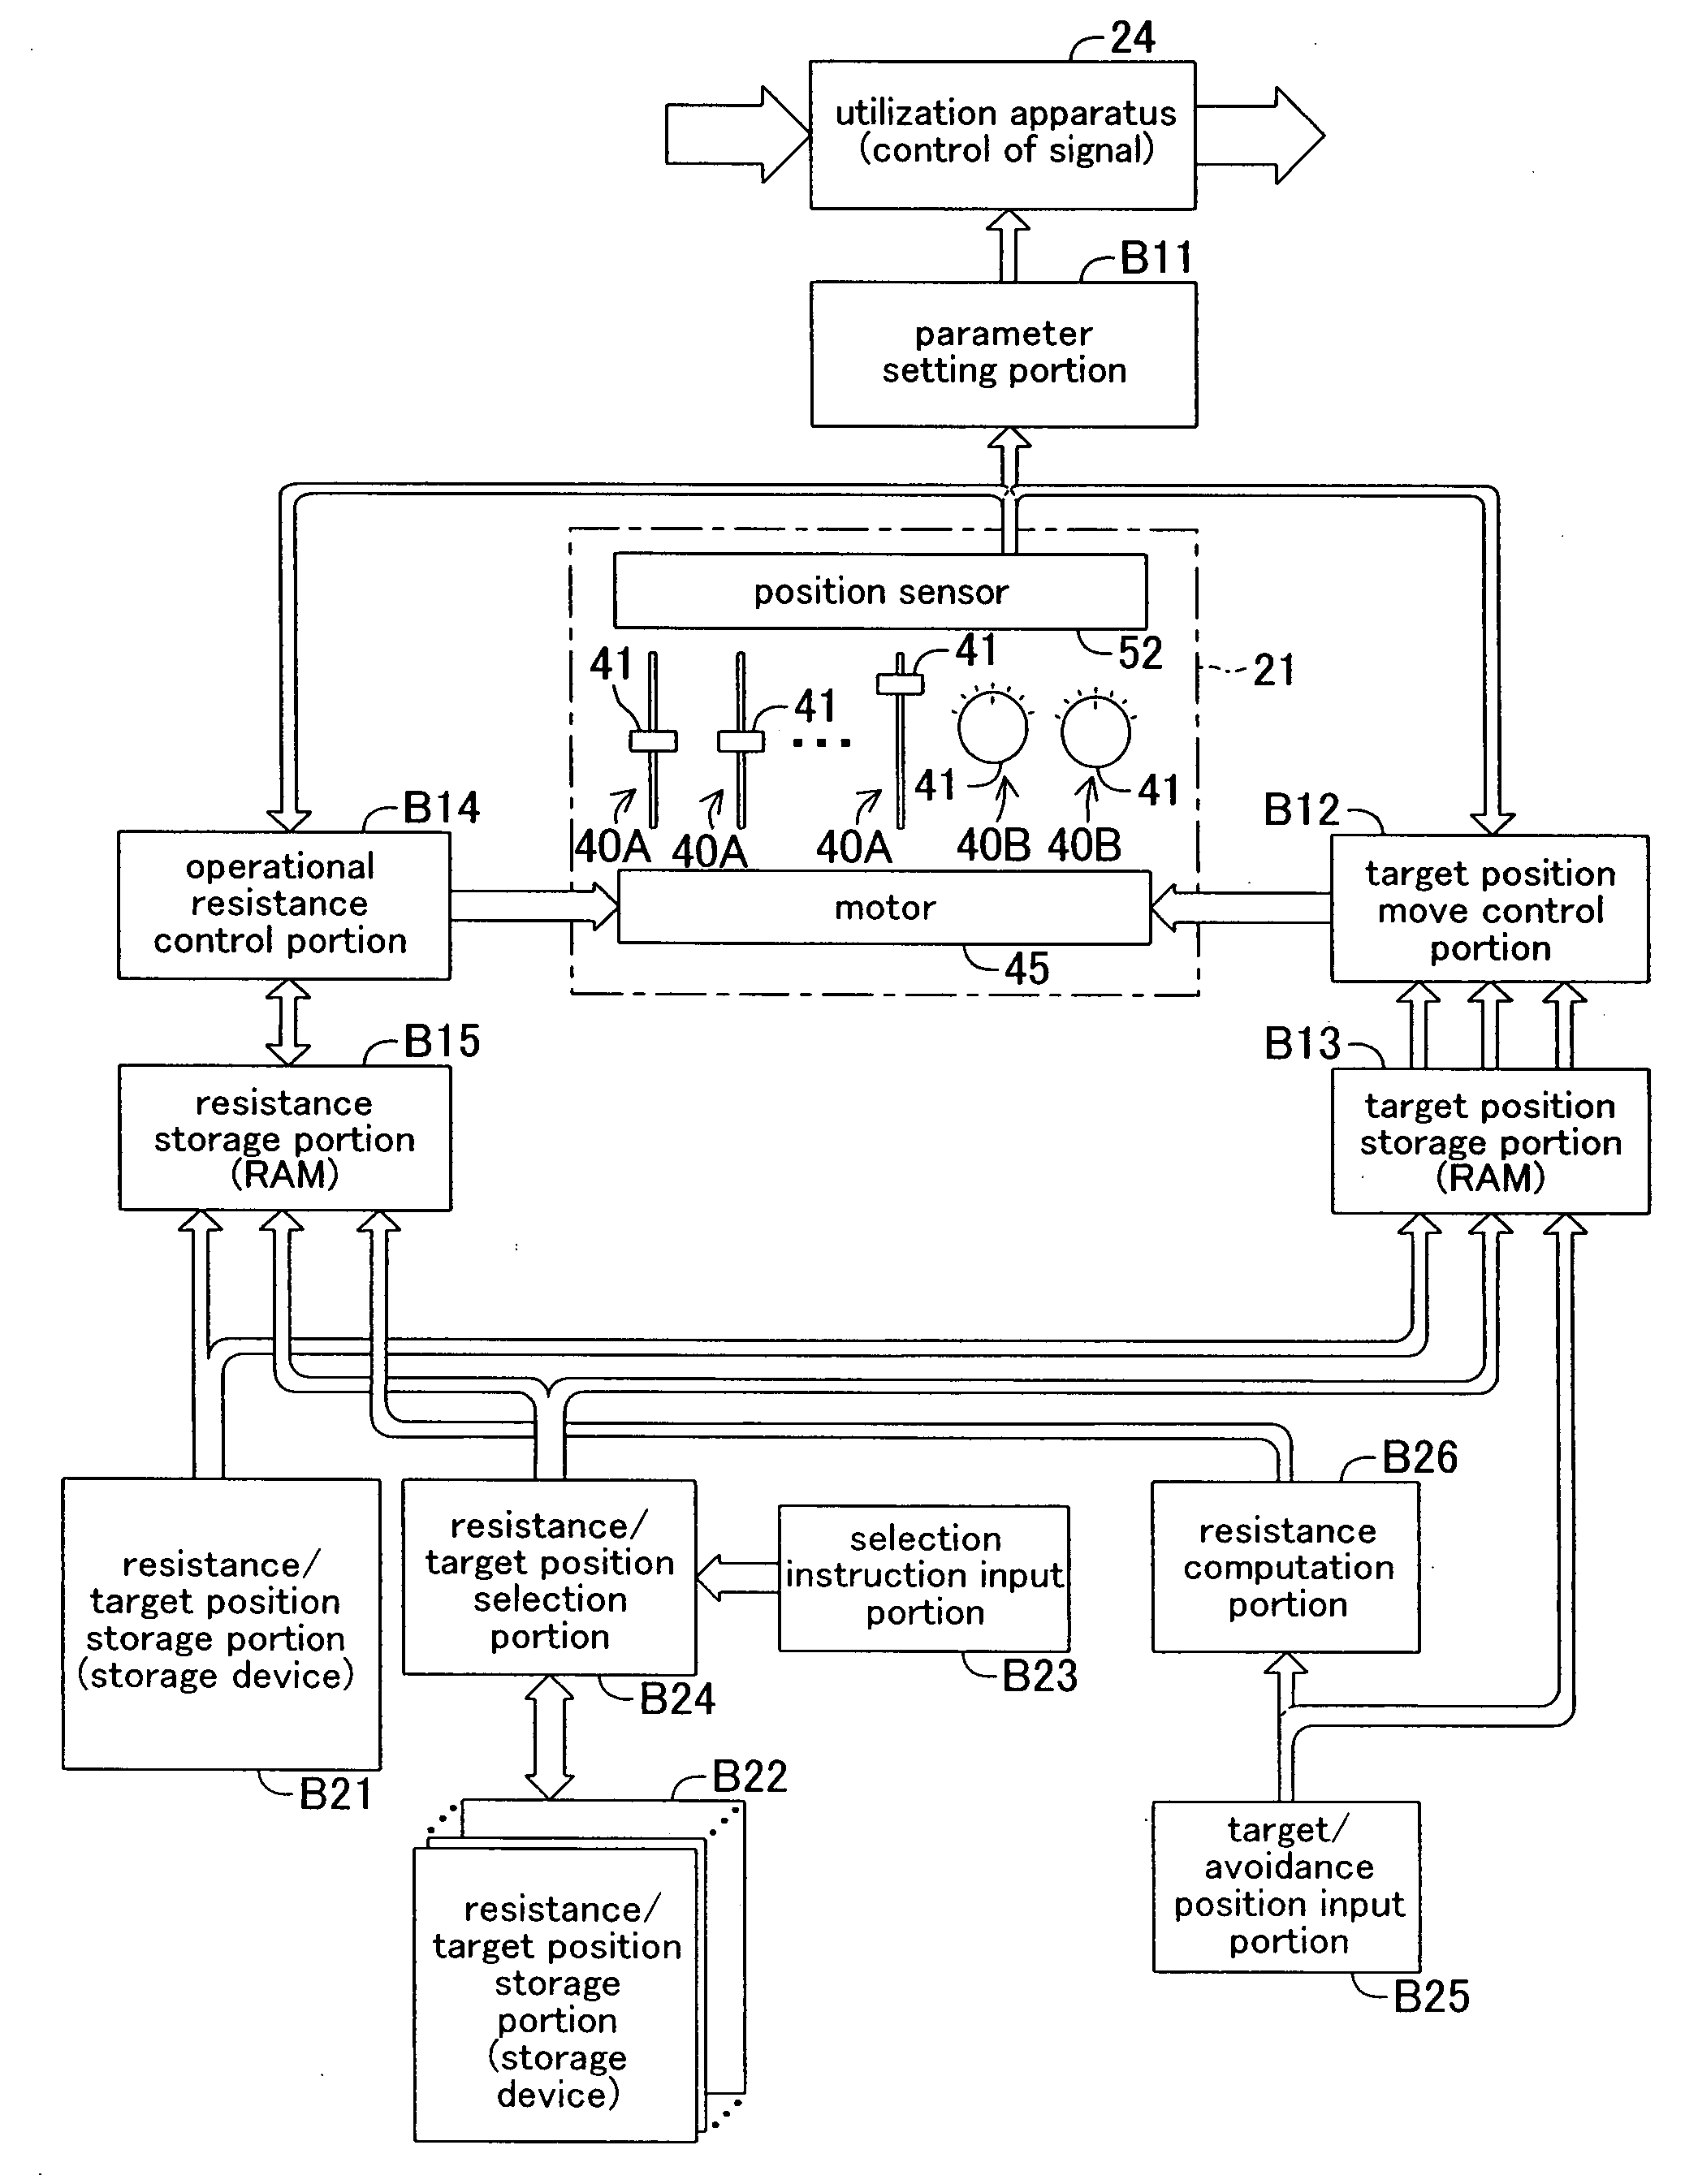 Parameter setting apparatus